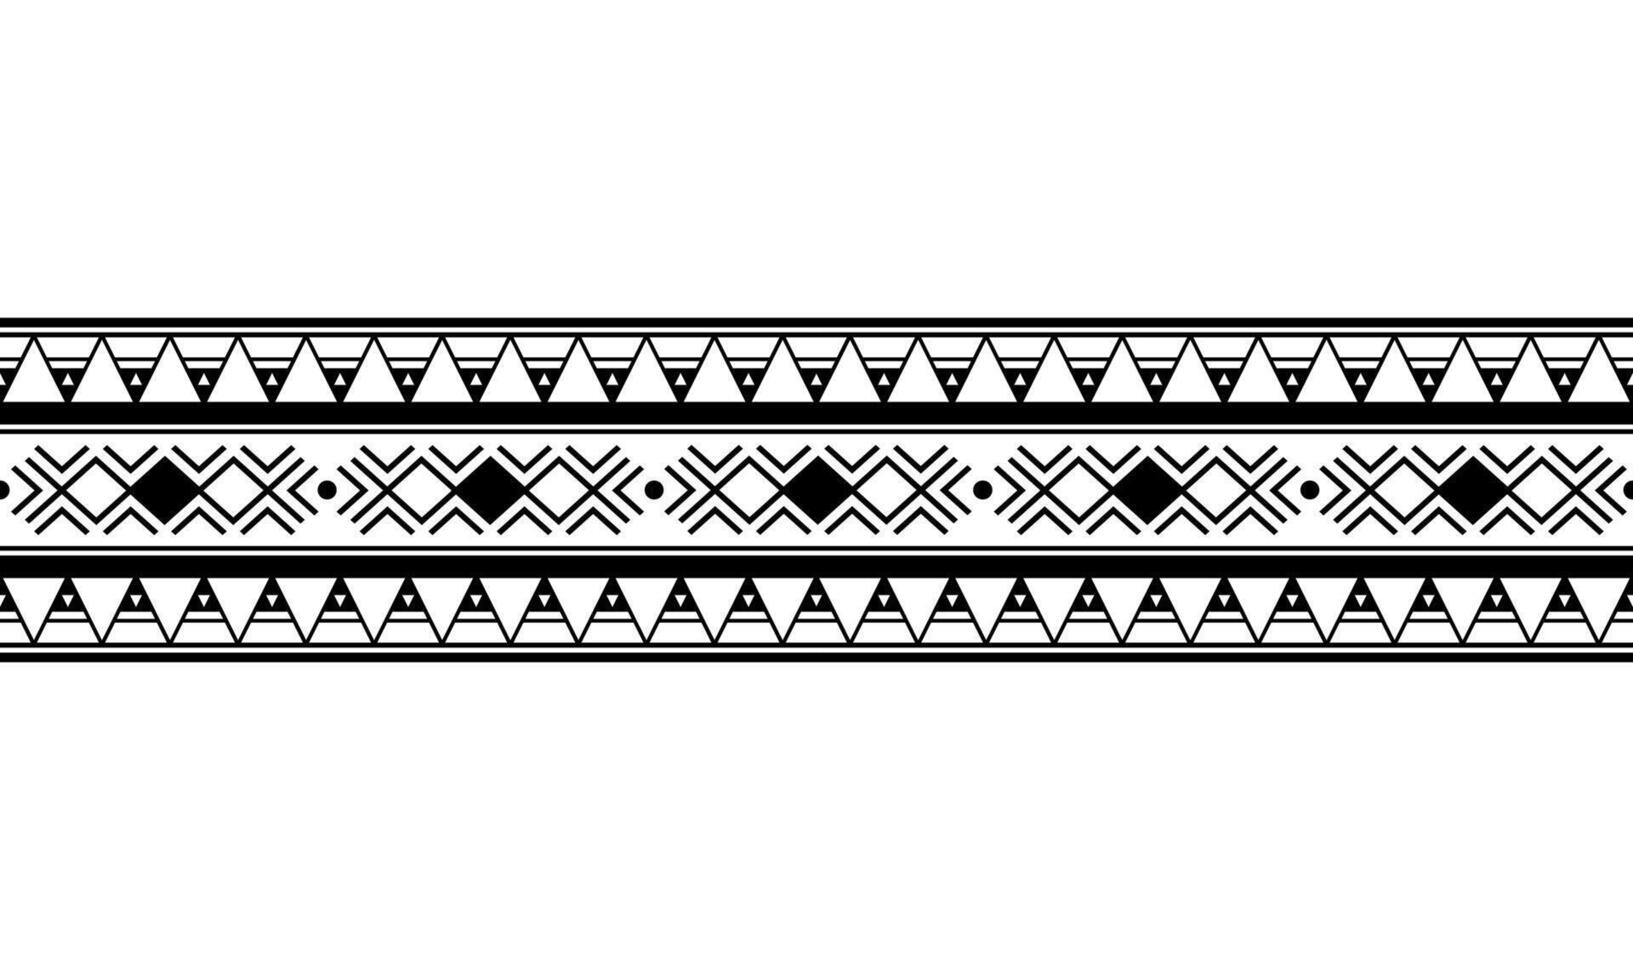 maorí polinesio tatuaje pulsera. tribal manga sin costura modelo vector. samoano frontera tatuaje diseño delantero brazo o pie. brazalete tatuaje tribal. vector